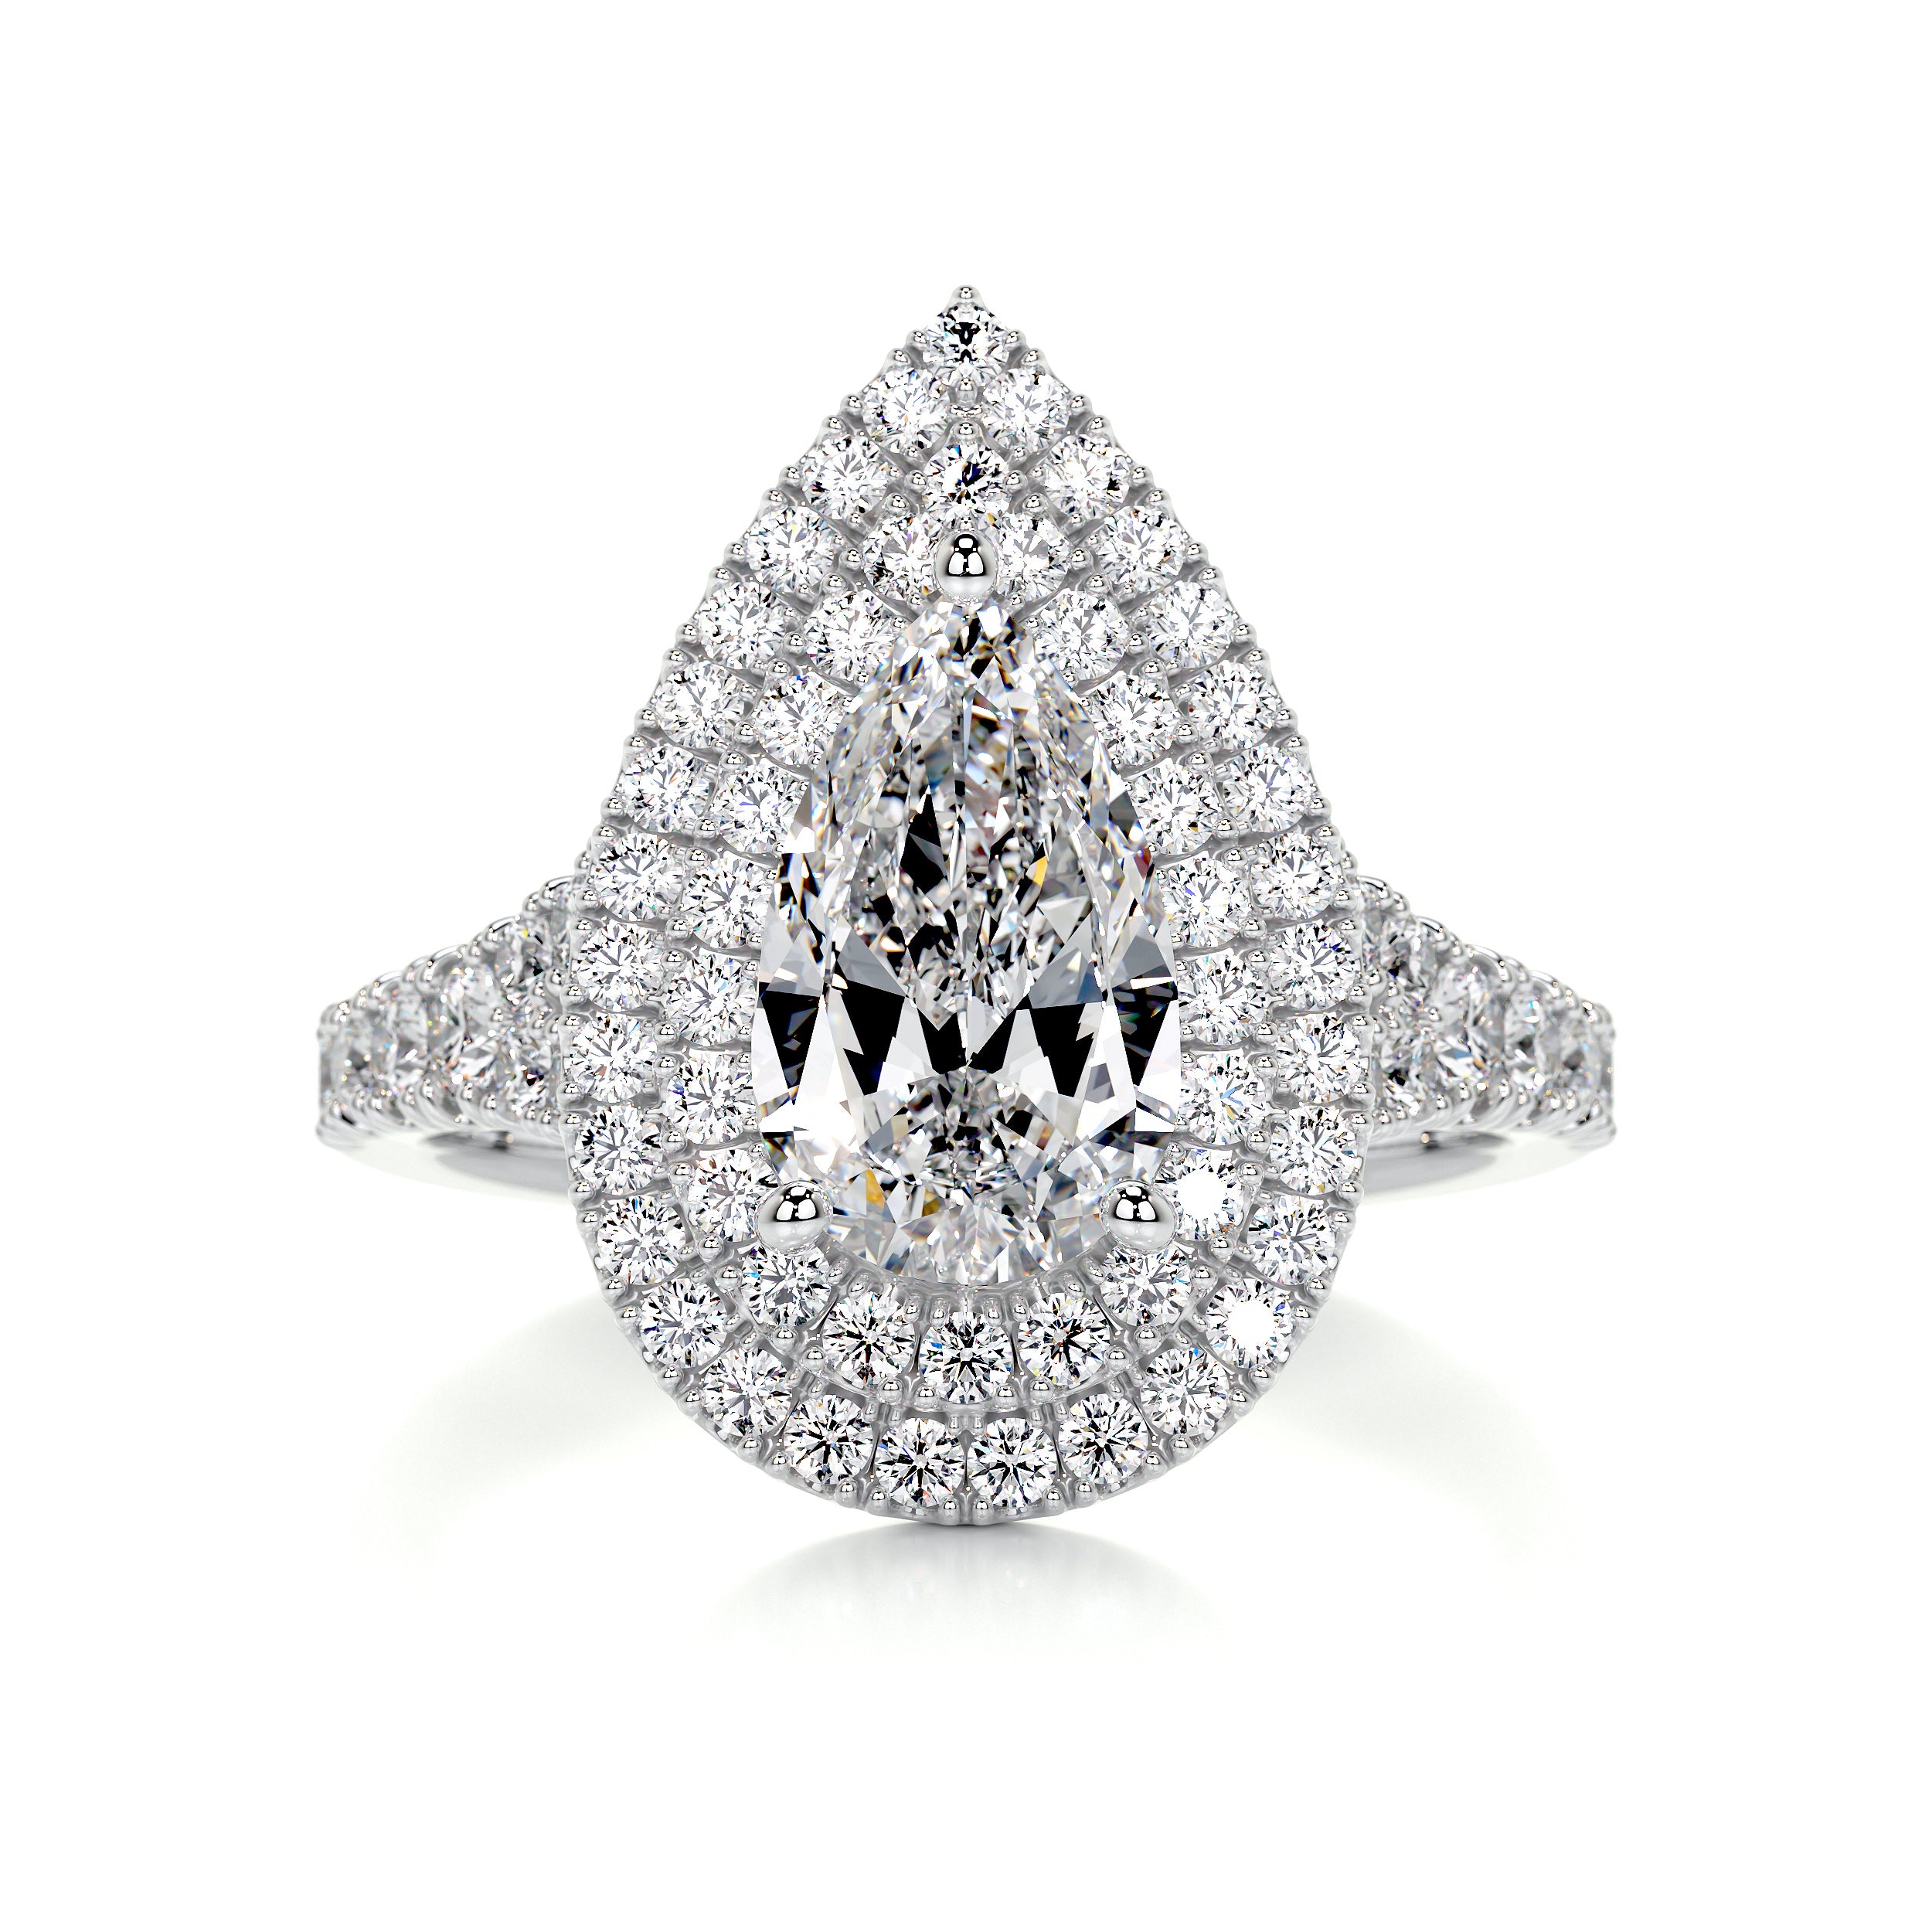 Melanie Diamond Engagement Ring   (1.75 Carat) -14K White Gold